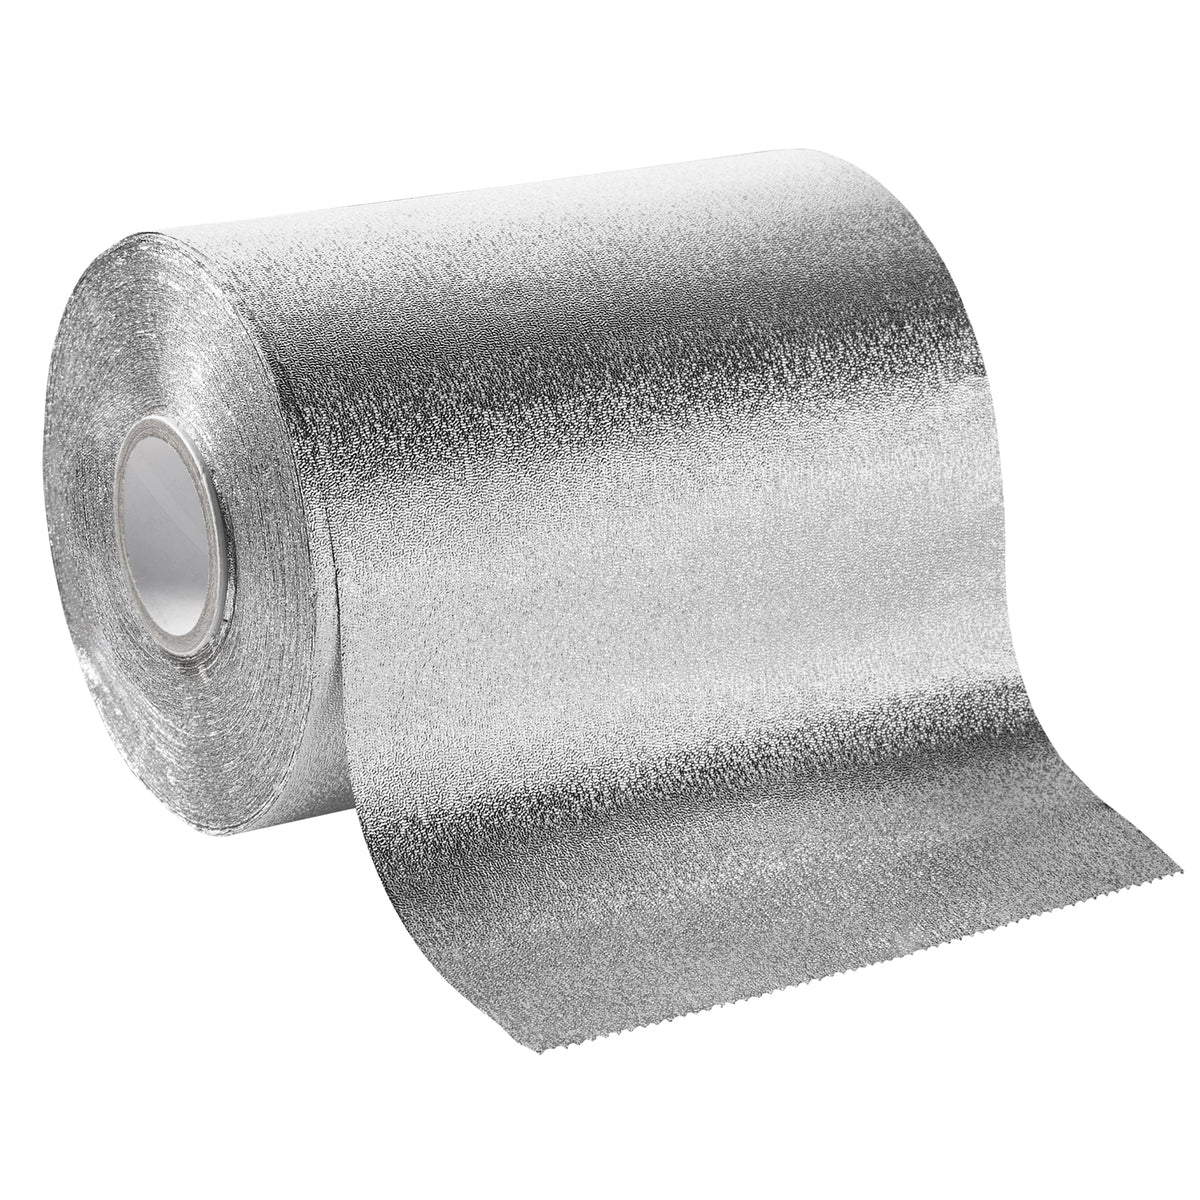 BaBylissPRO Aluminum Coloring Foil Roll, 361 Feet